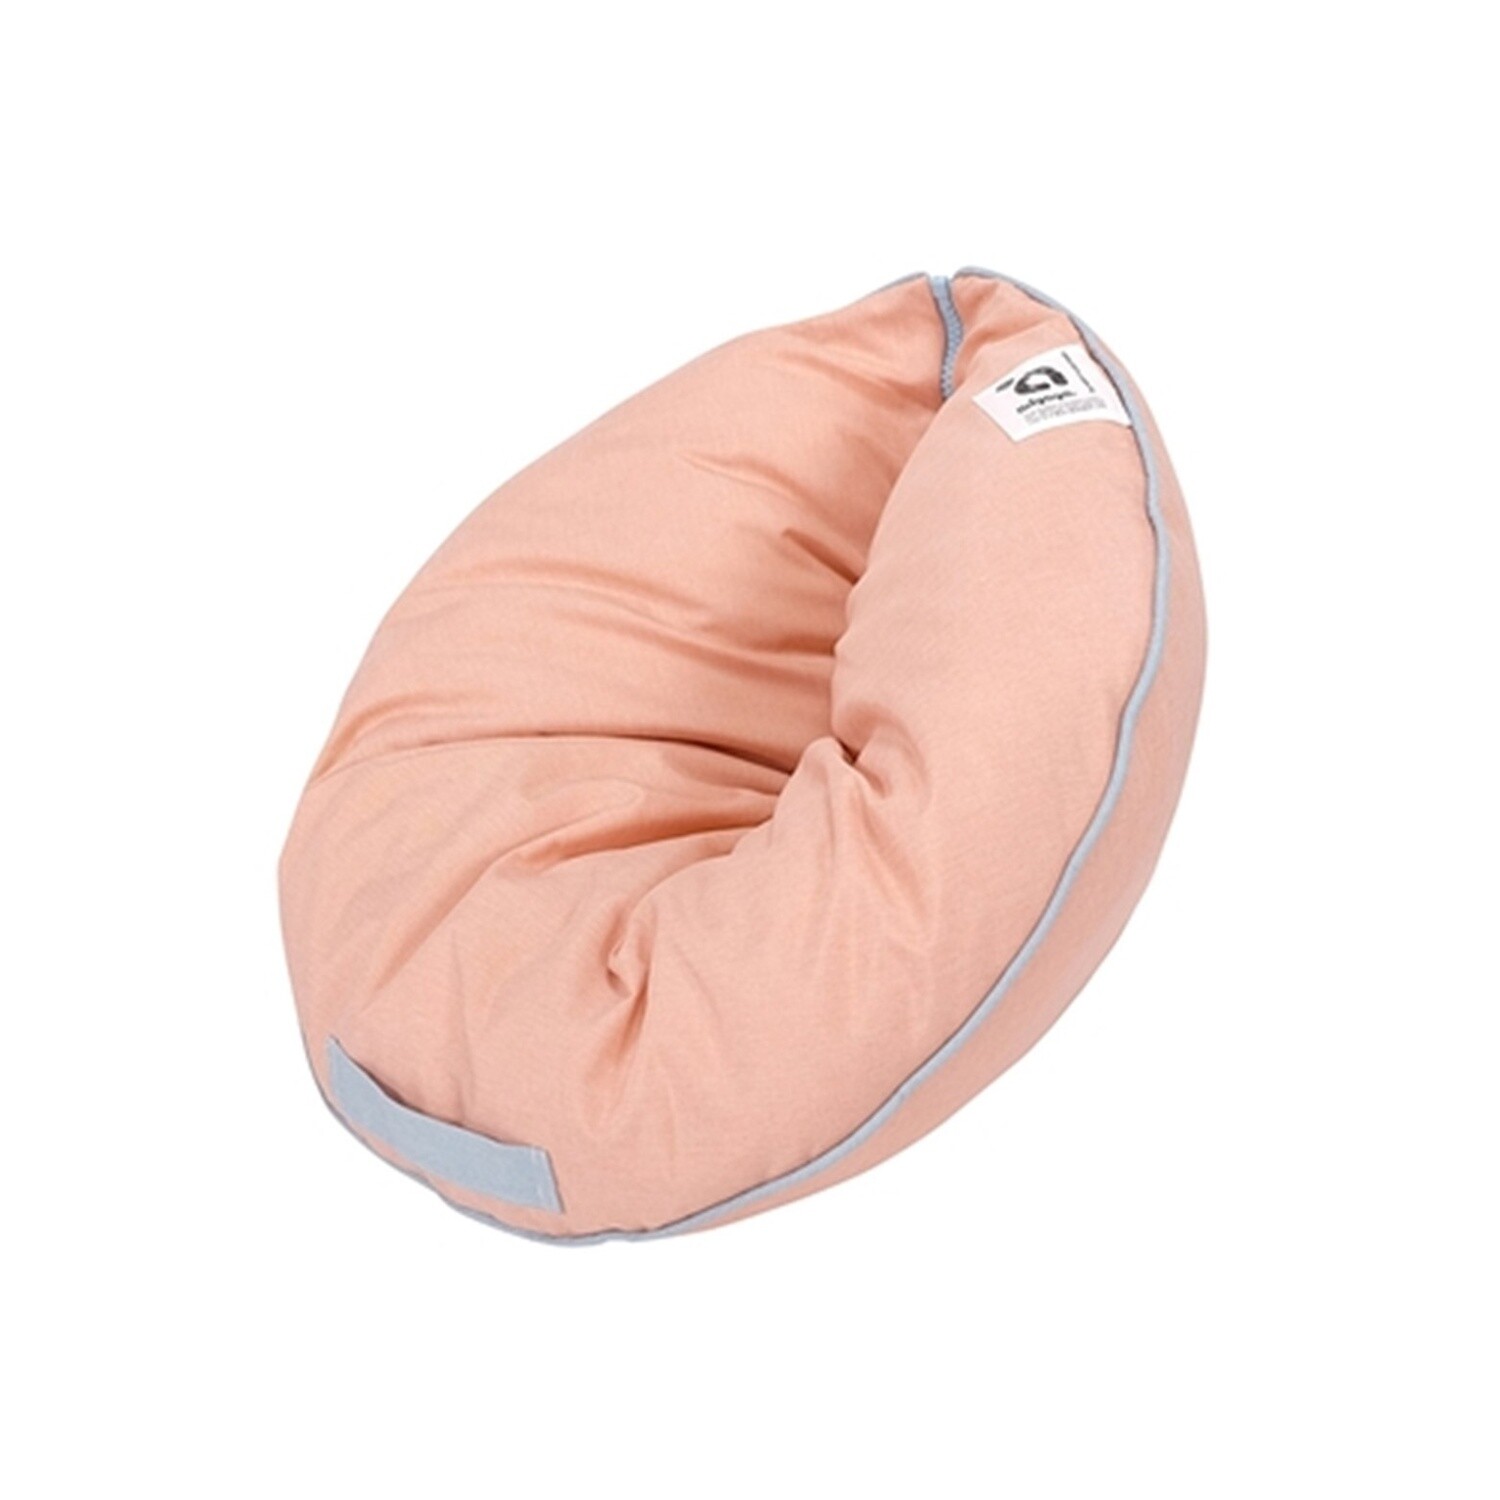 "Snuggler Super Comfortable Nook Pet Bed - Playful Peach "